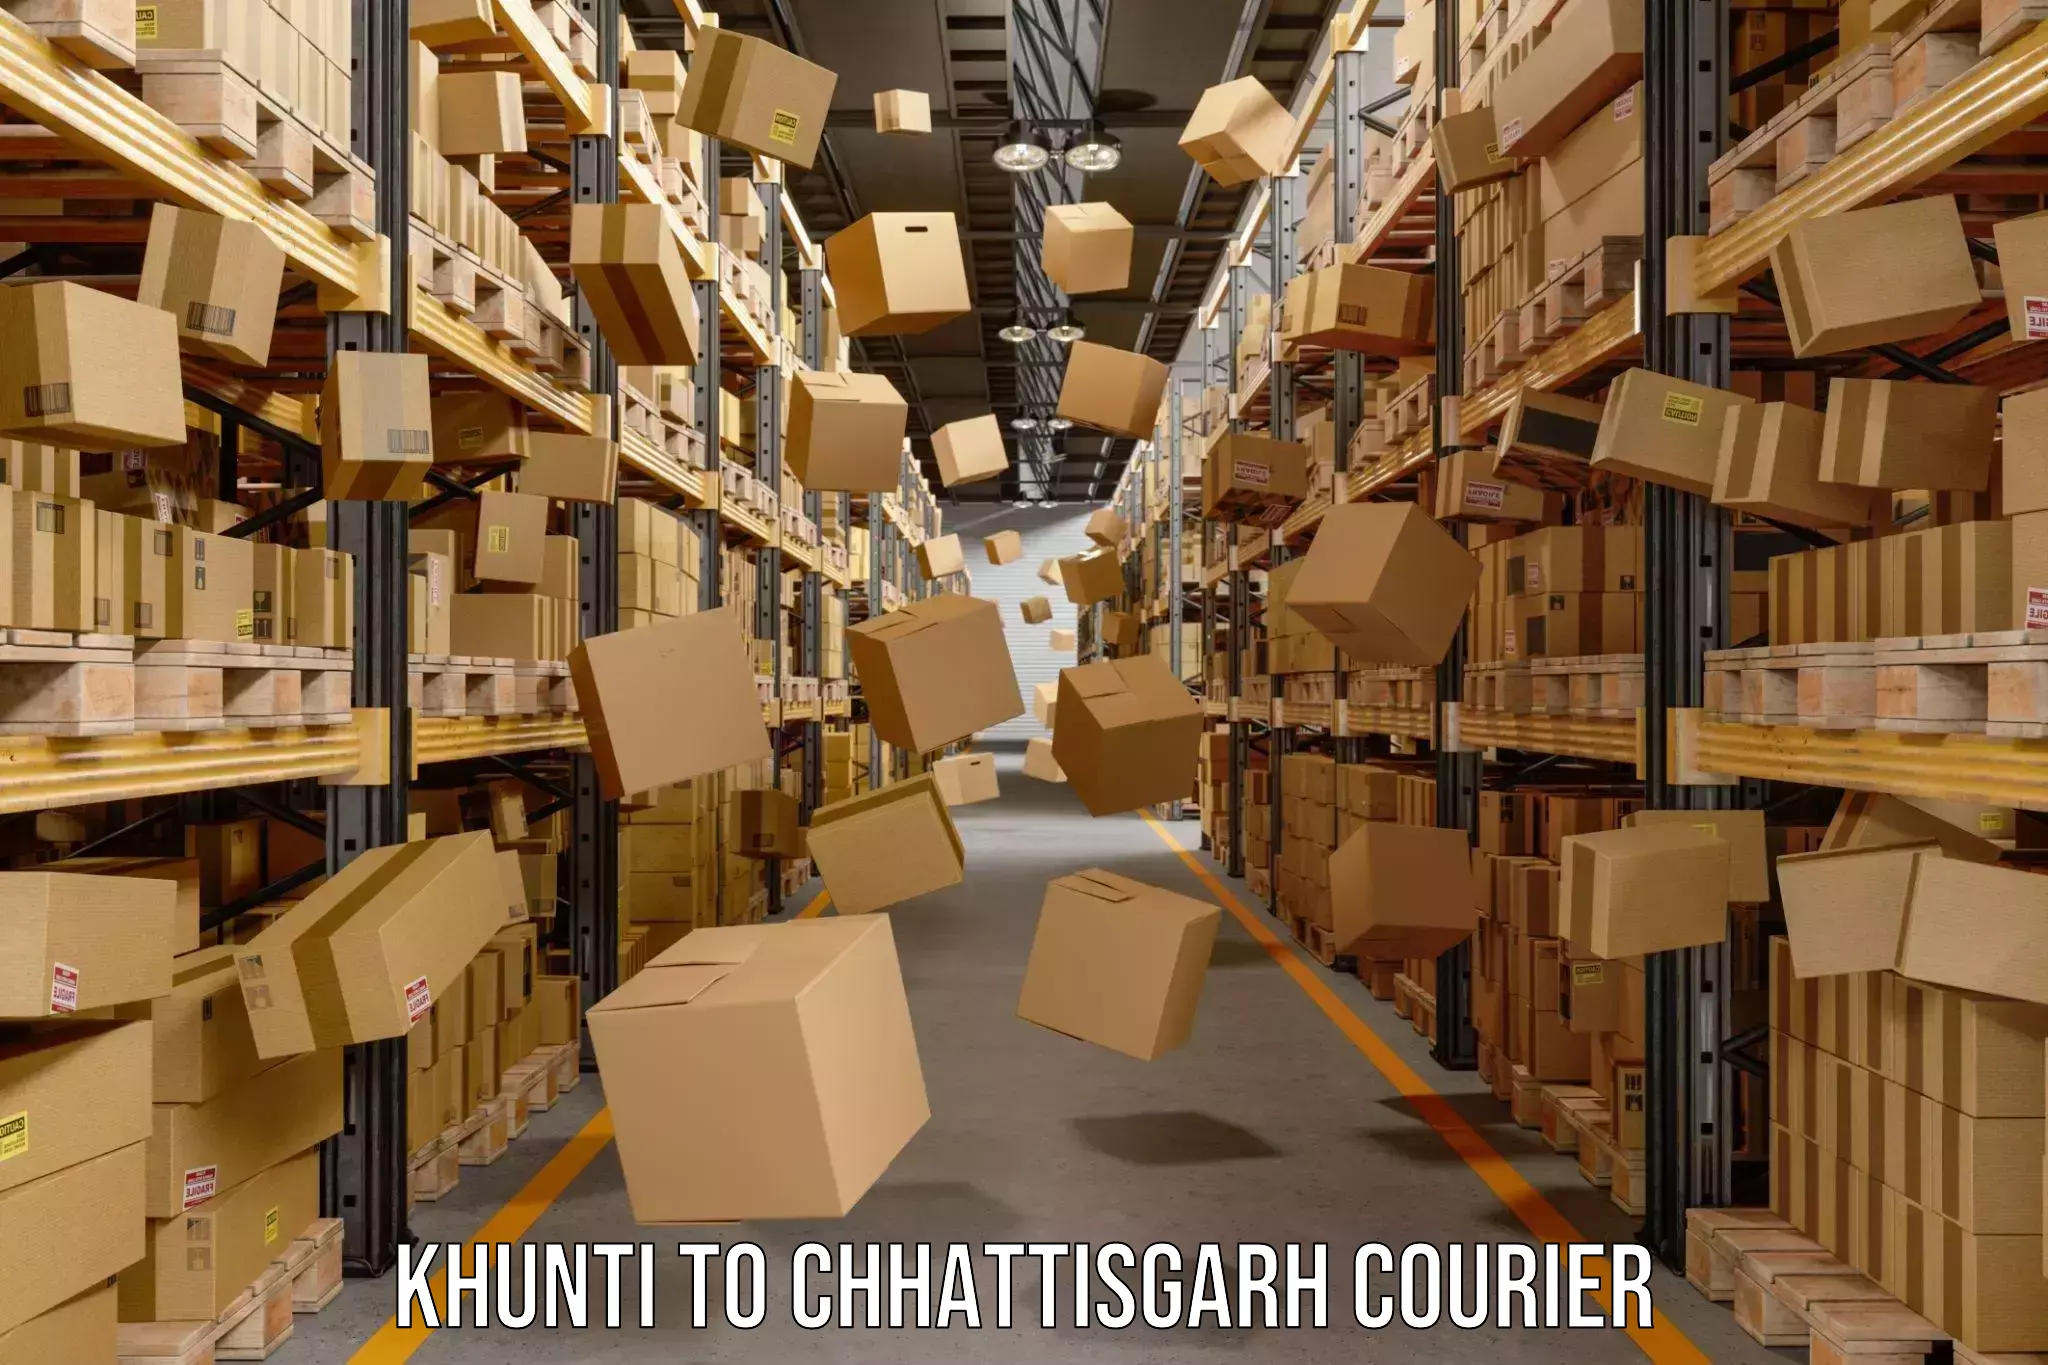 State-of-the-art courier technology Khunti to Pandariya